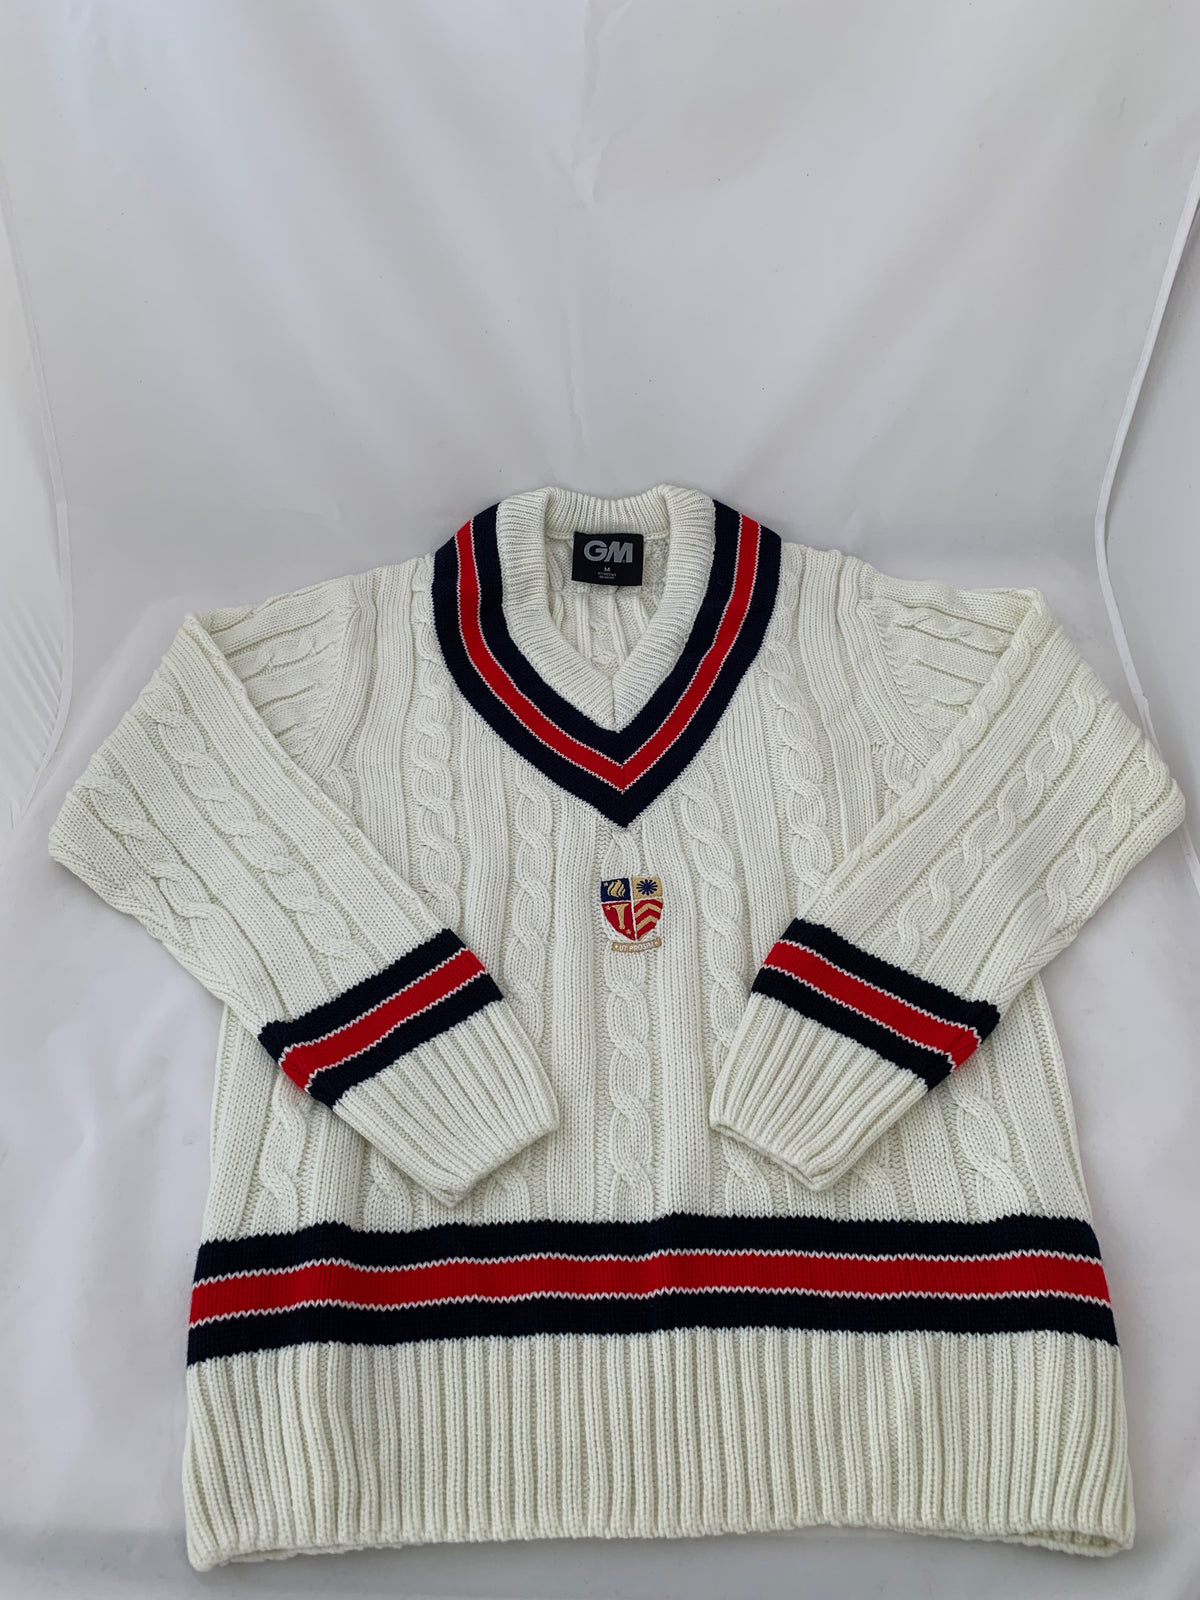 Ryde School Cricket Sweater